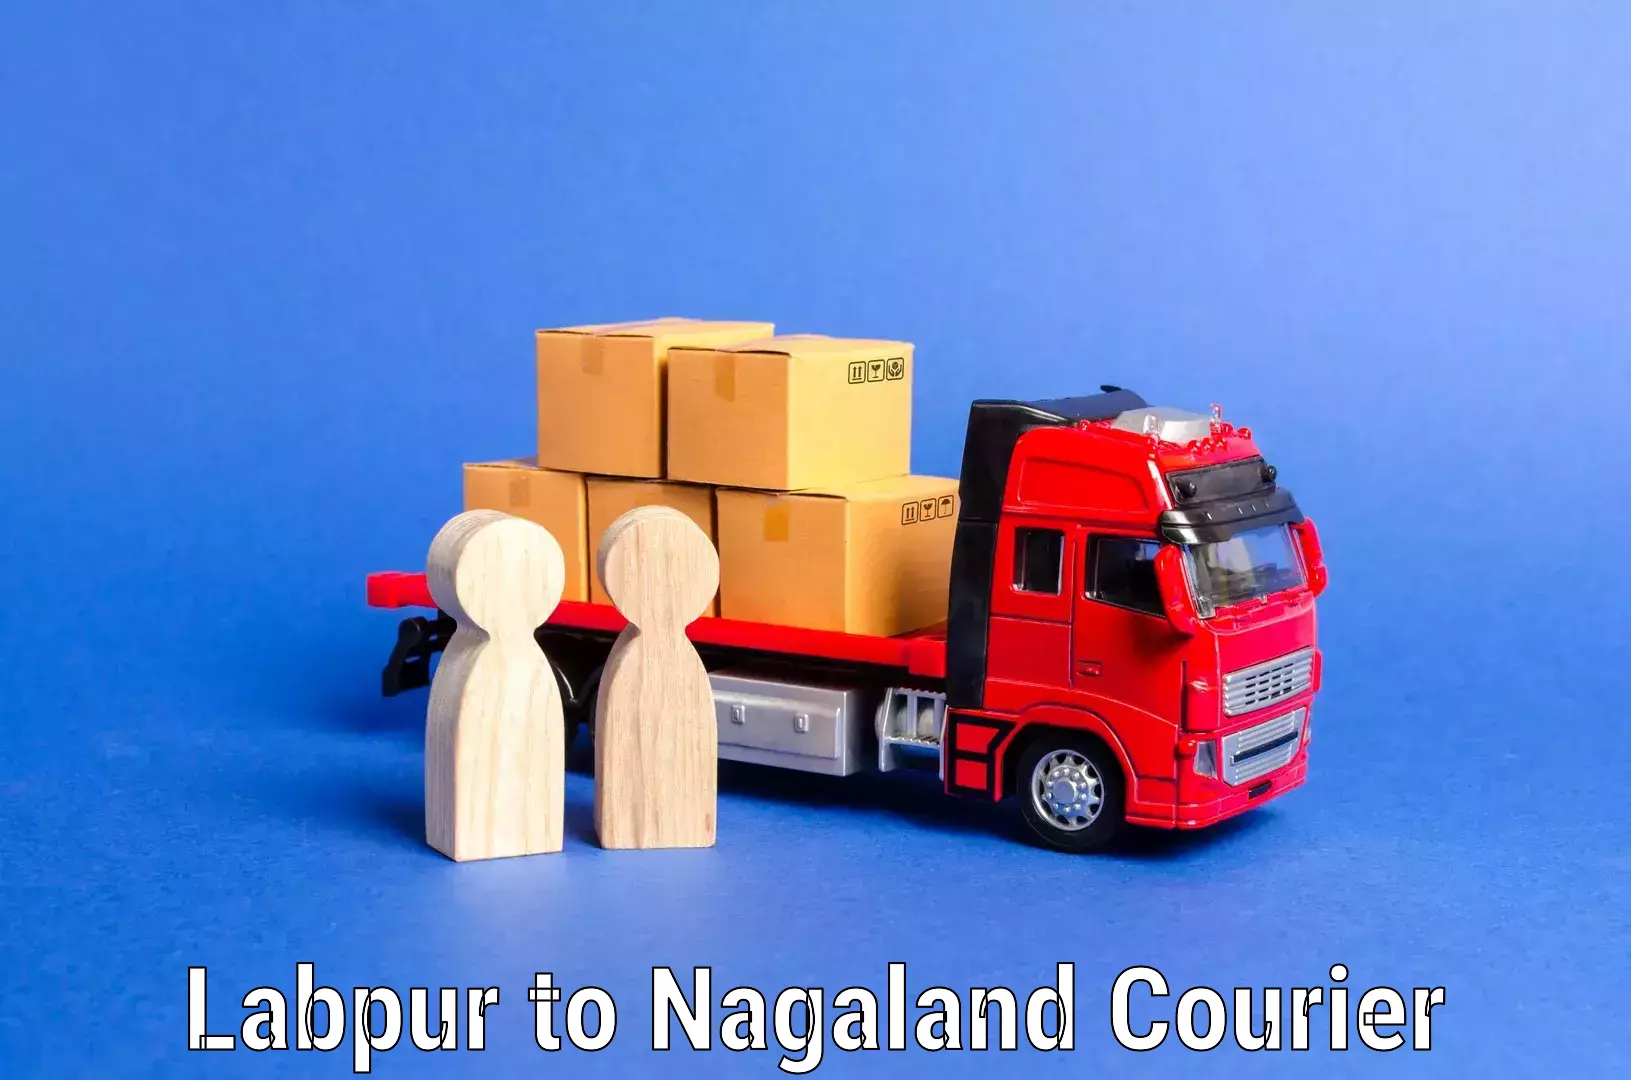 Home goods moving company Labpur to Nagaland